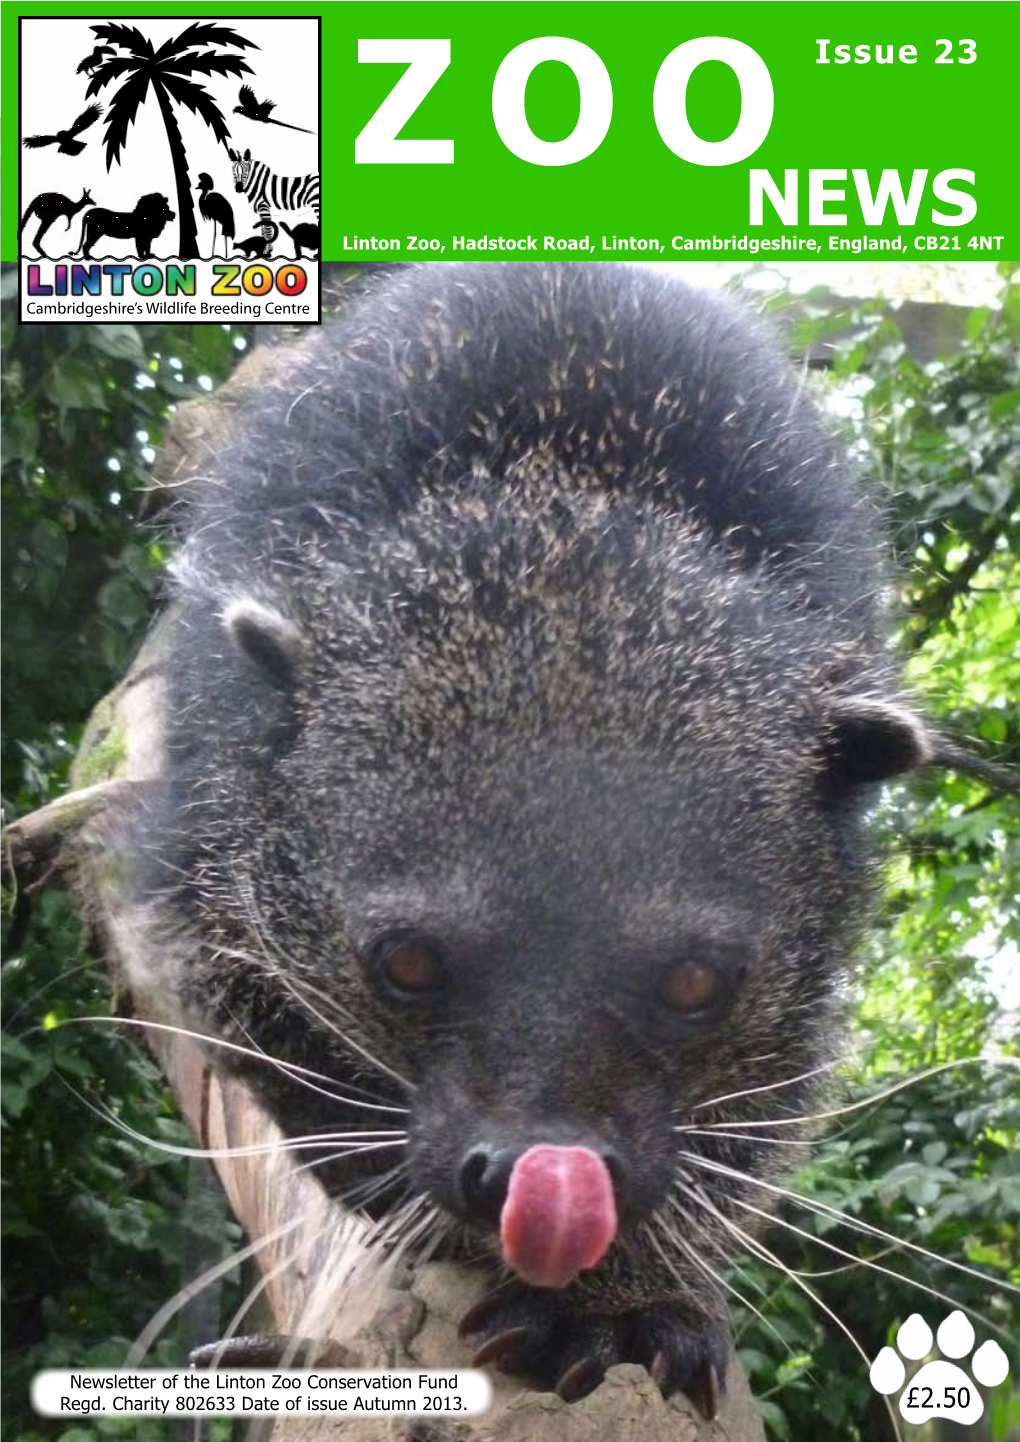 Issue 23 NEWS Linton Zoo, Hadstock Road, Linton, Cambridgeshire, England, CB21 4NT